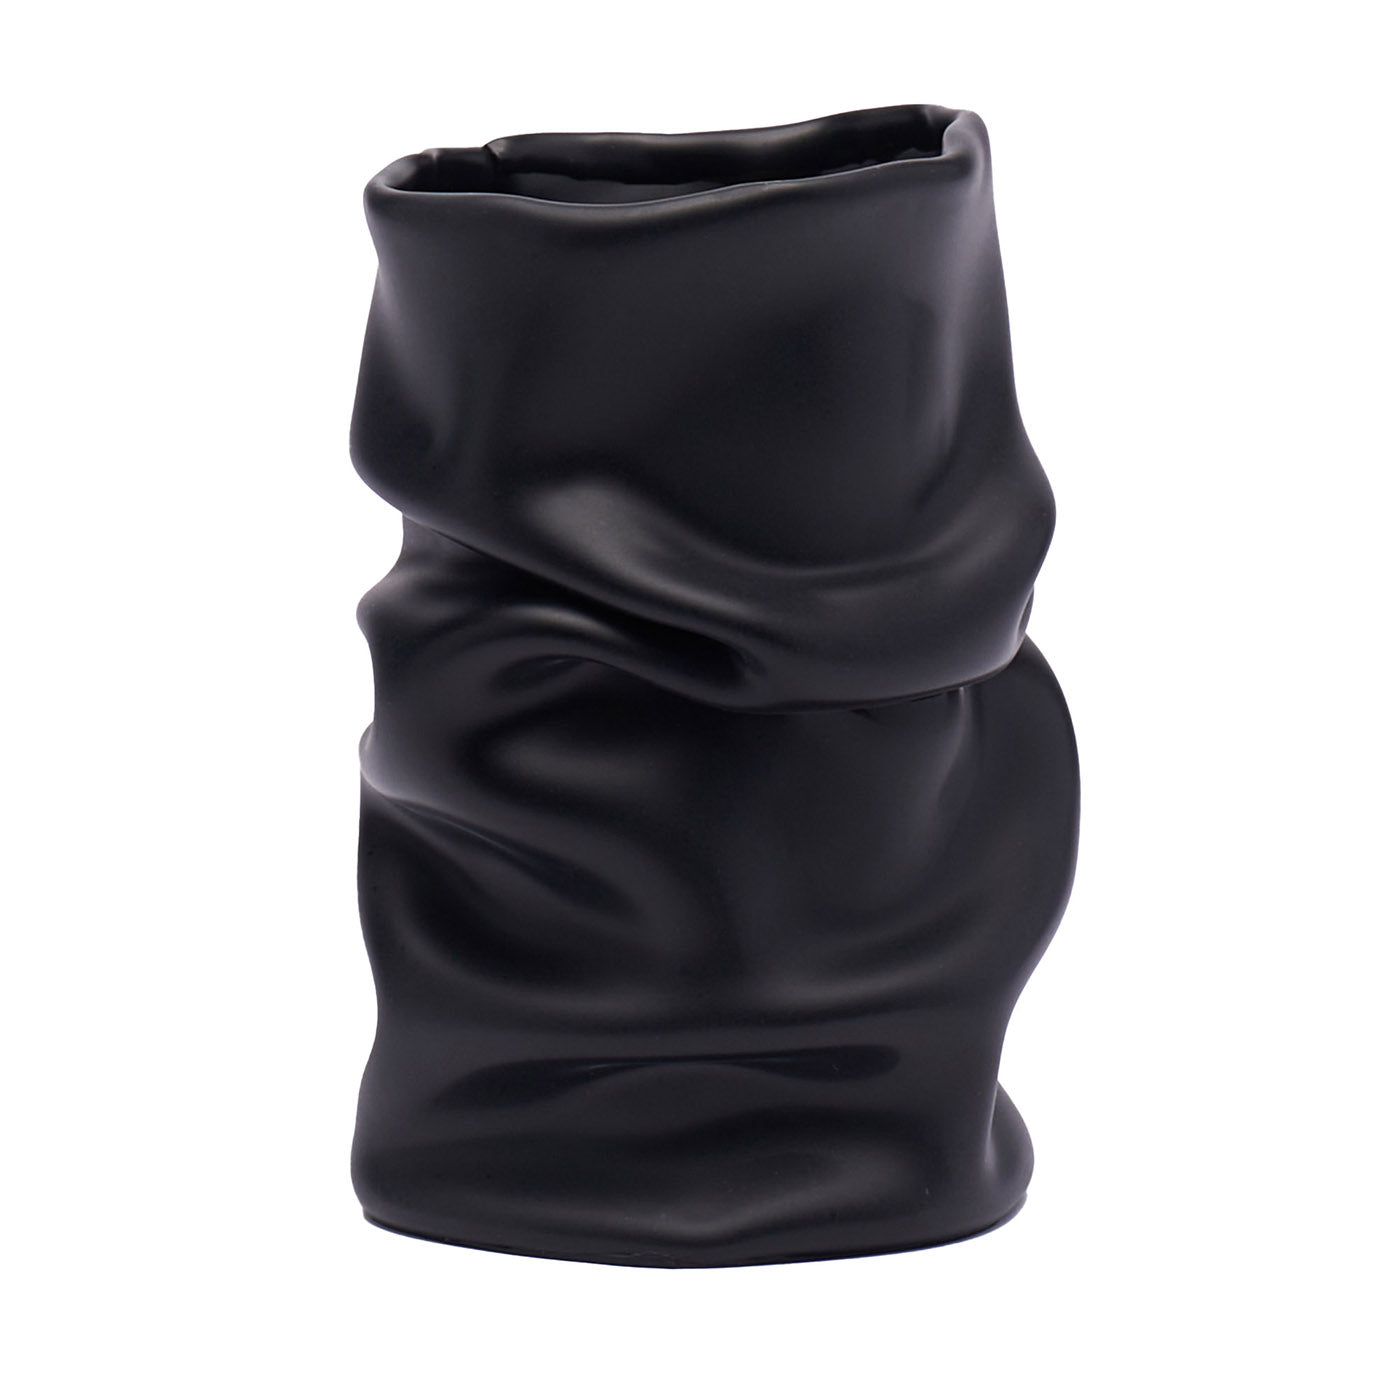 Venere Extra-Small Black Vase - Main view